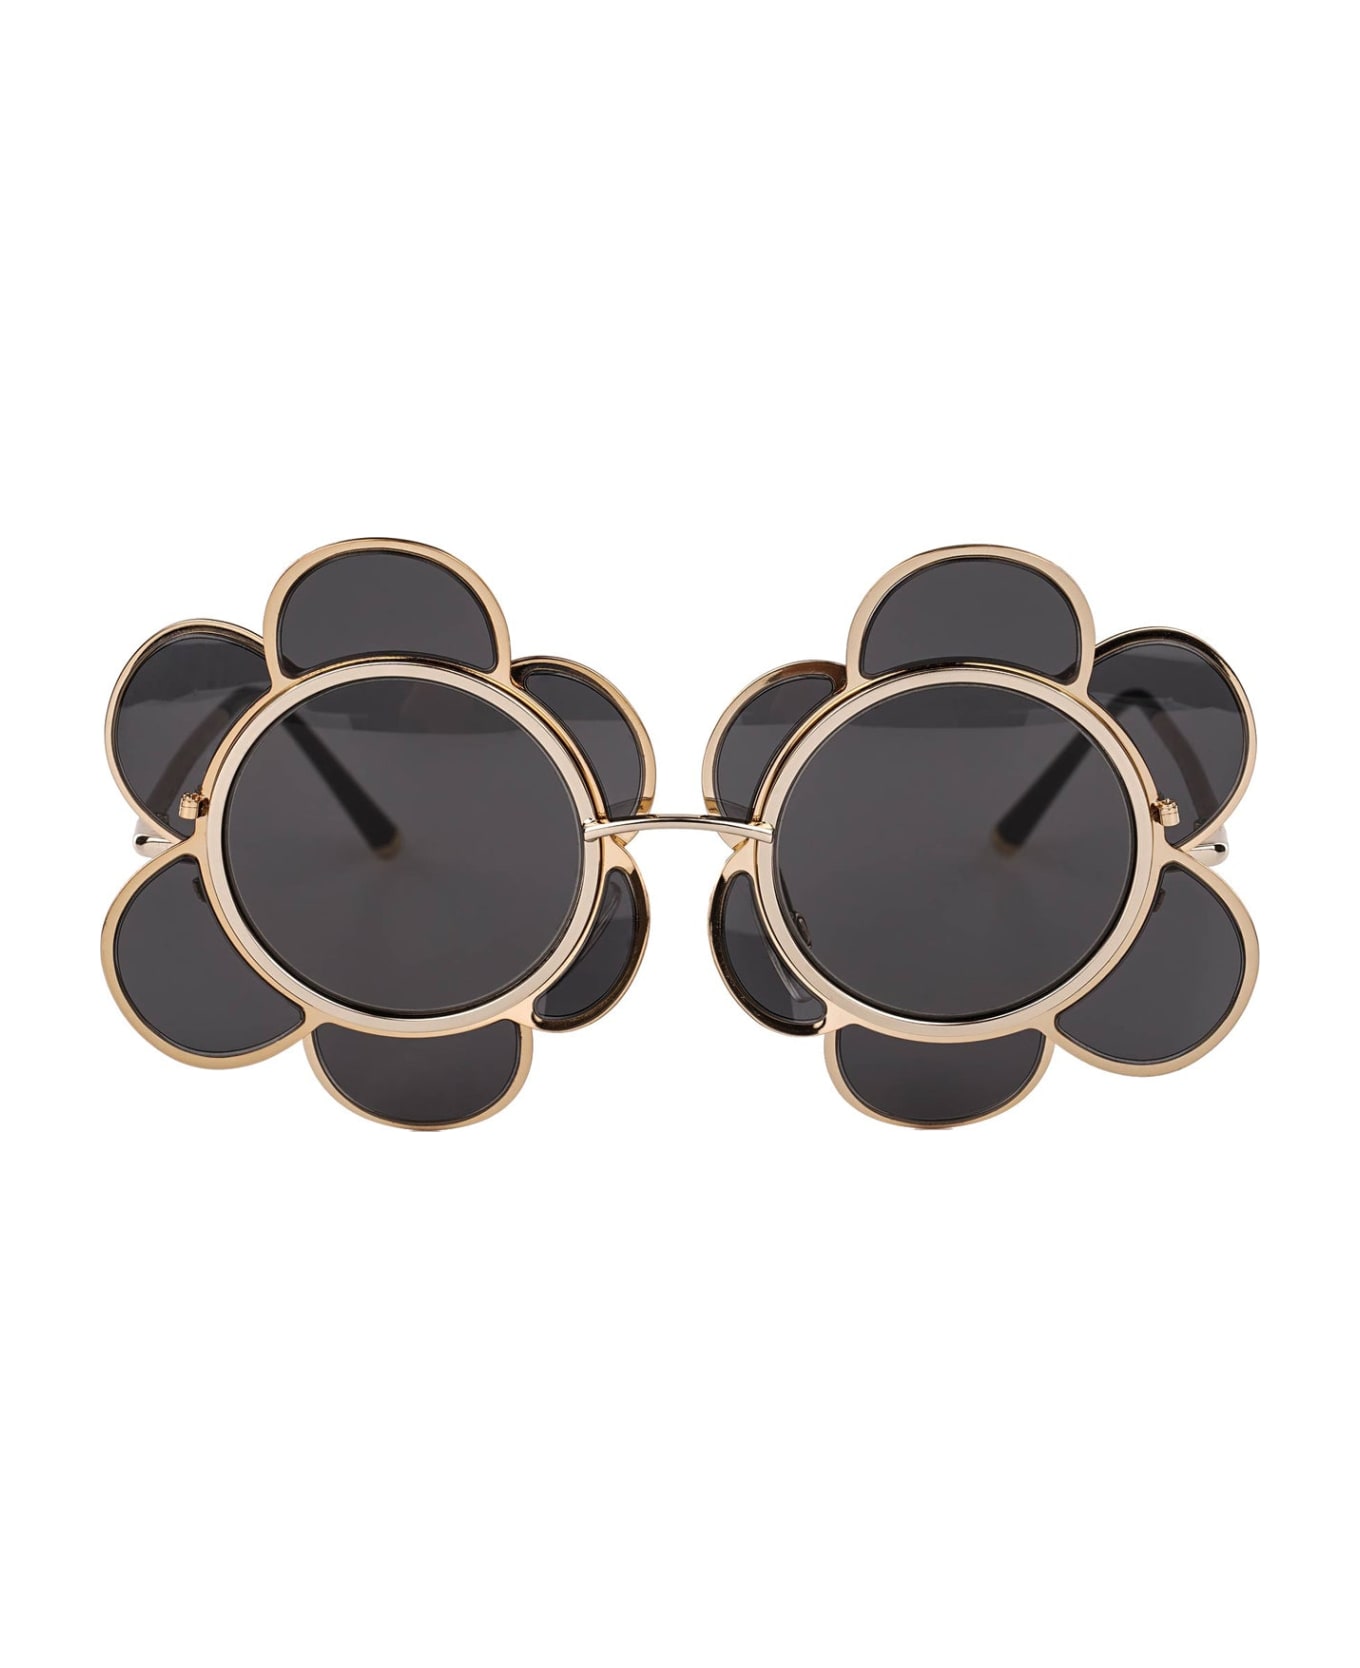 Dolce & Gabbana Special Edition Flower Sunglasses - Black